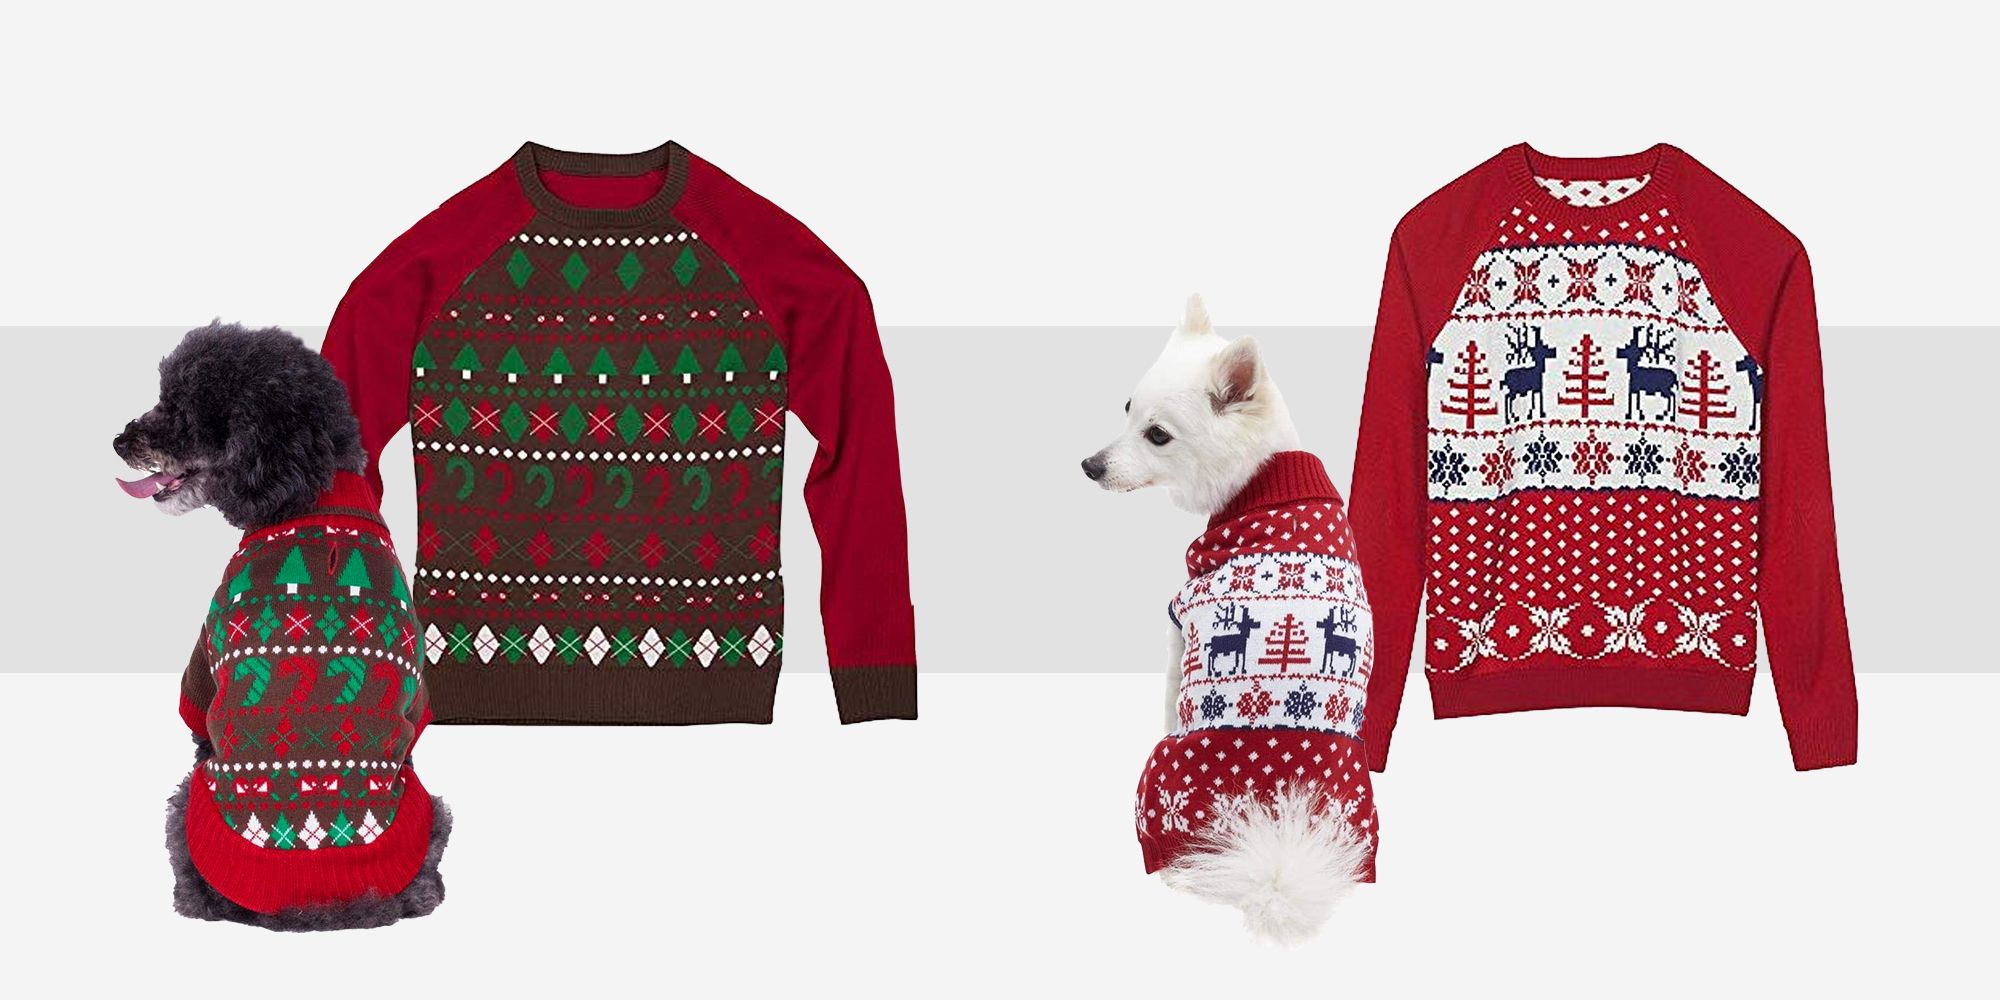 Leash Hole Option Winter Fleece Long Johns Onesie Christmas Holiday Sweater Winter Woodland Animals Print Dog or Cat Pajamas